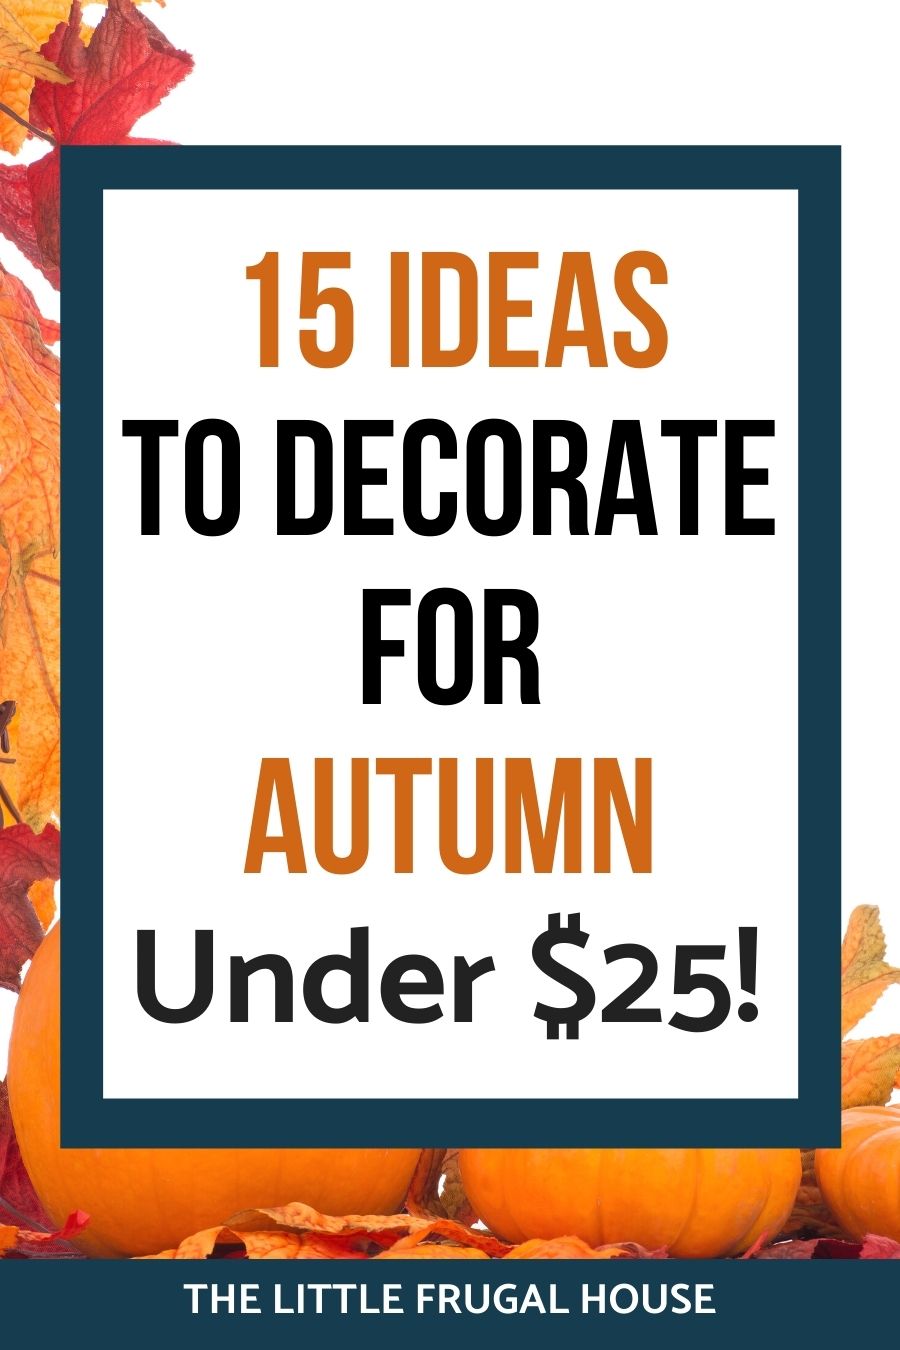 Autumn Decor Under $25 - The Little Frugal House